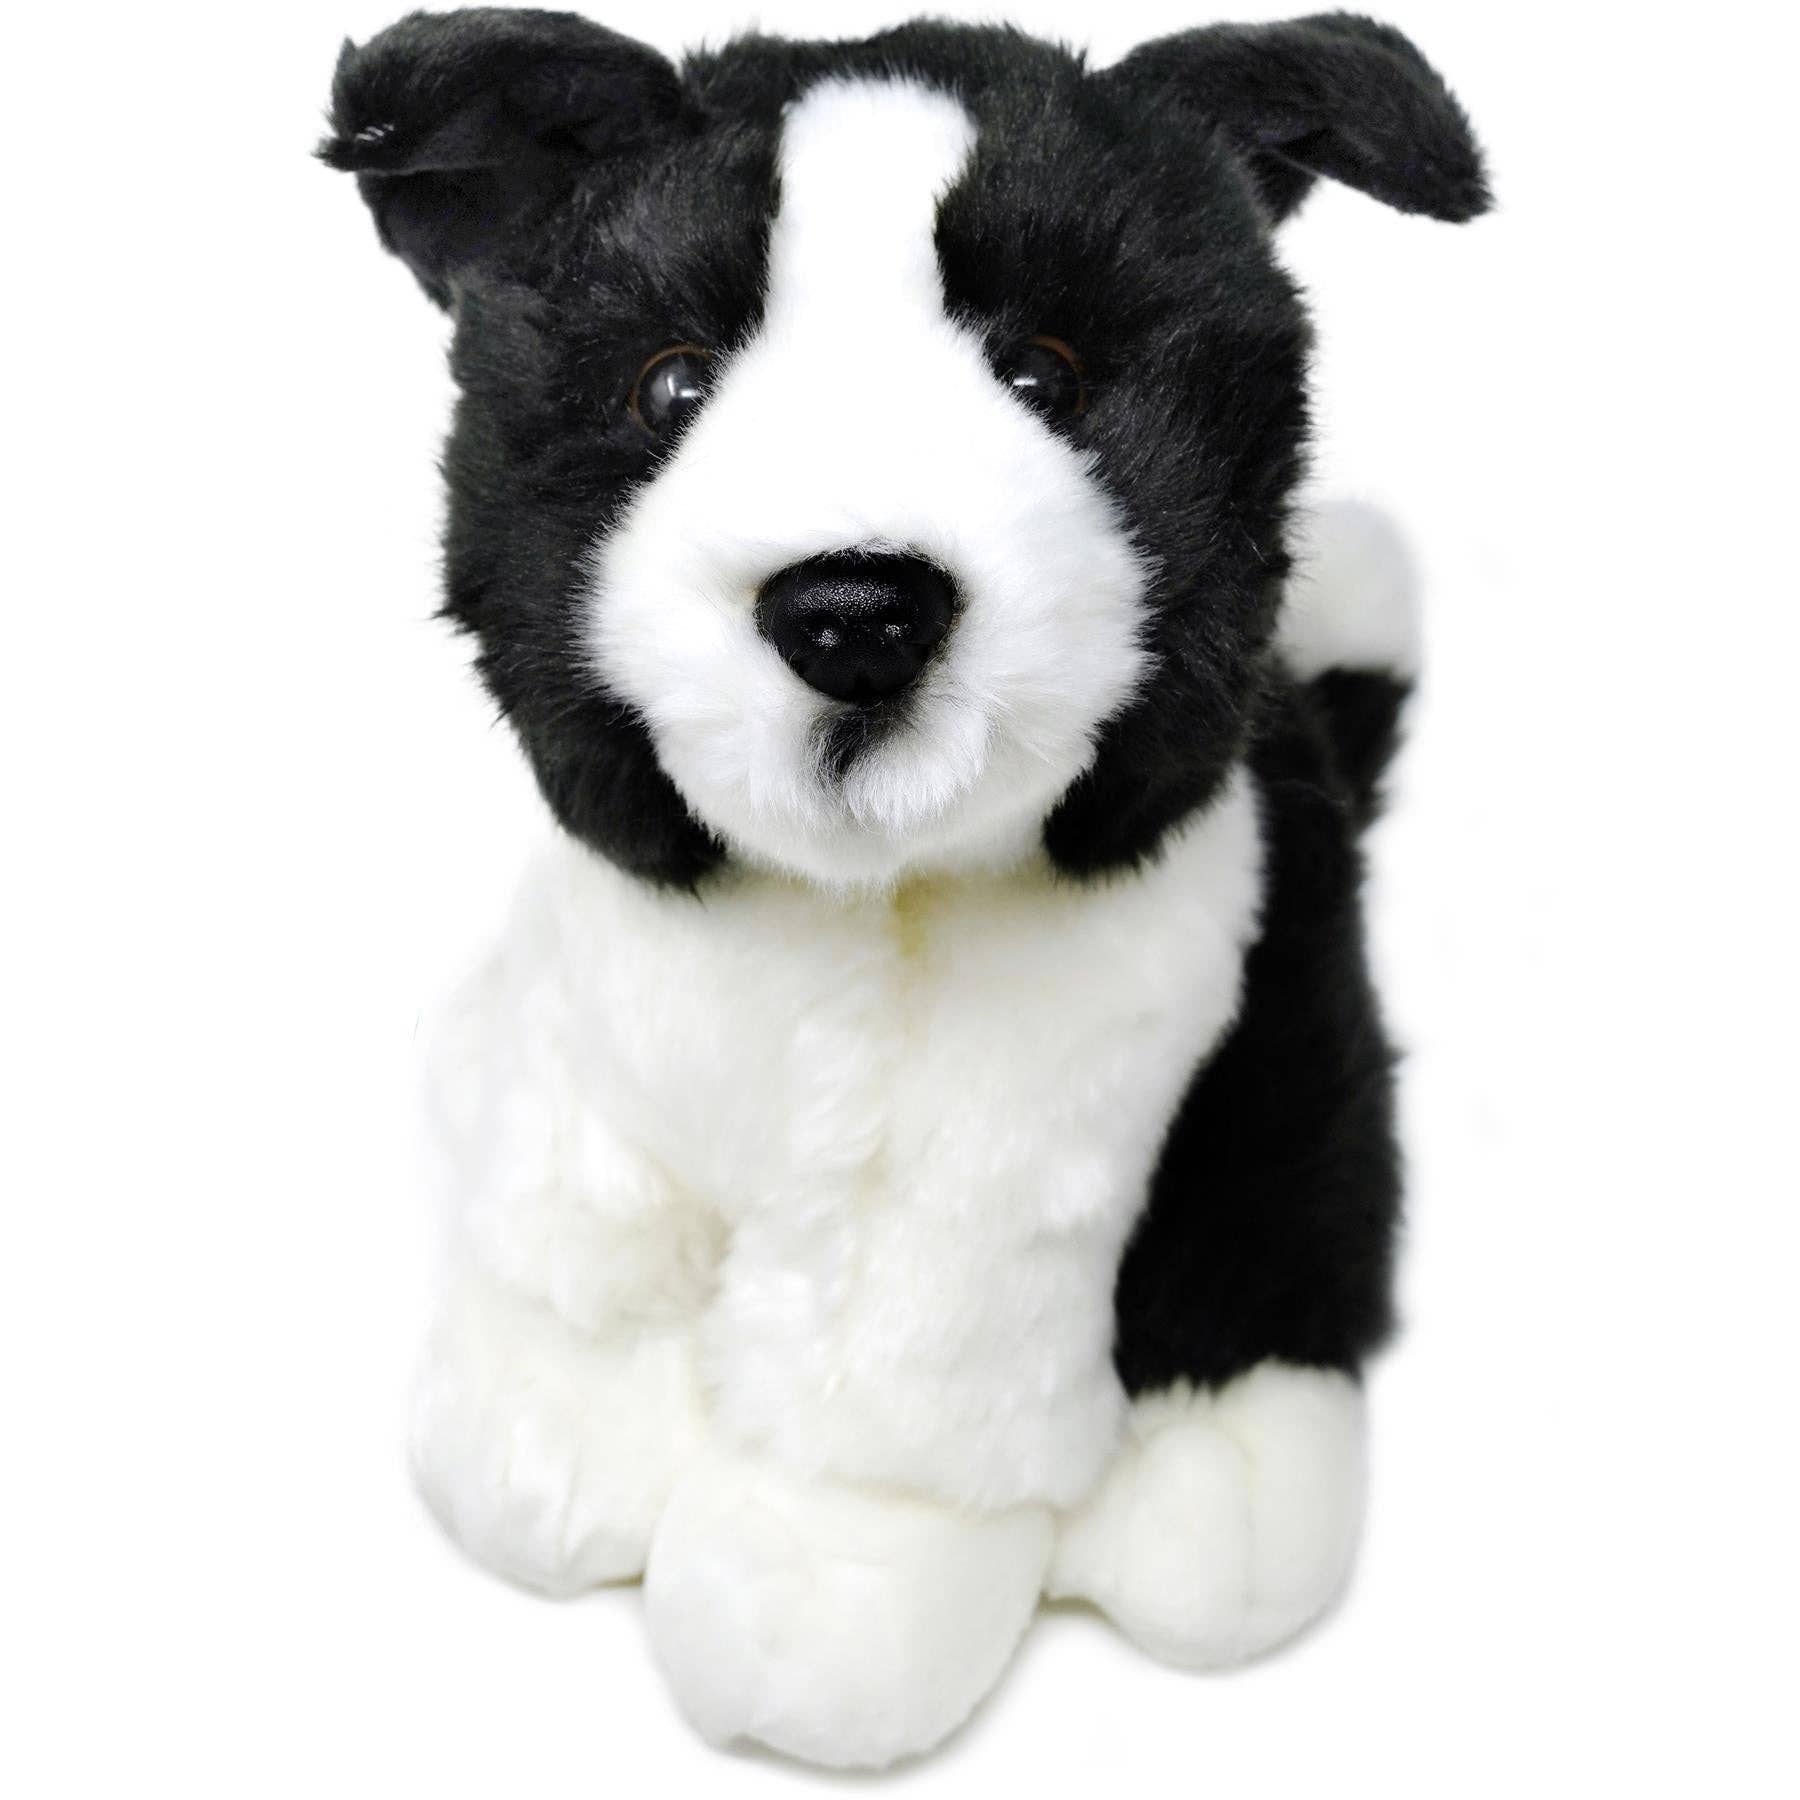 Sweet Border Collie, 11 Inch Stuffed Animal Plush